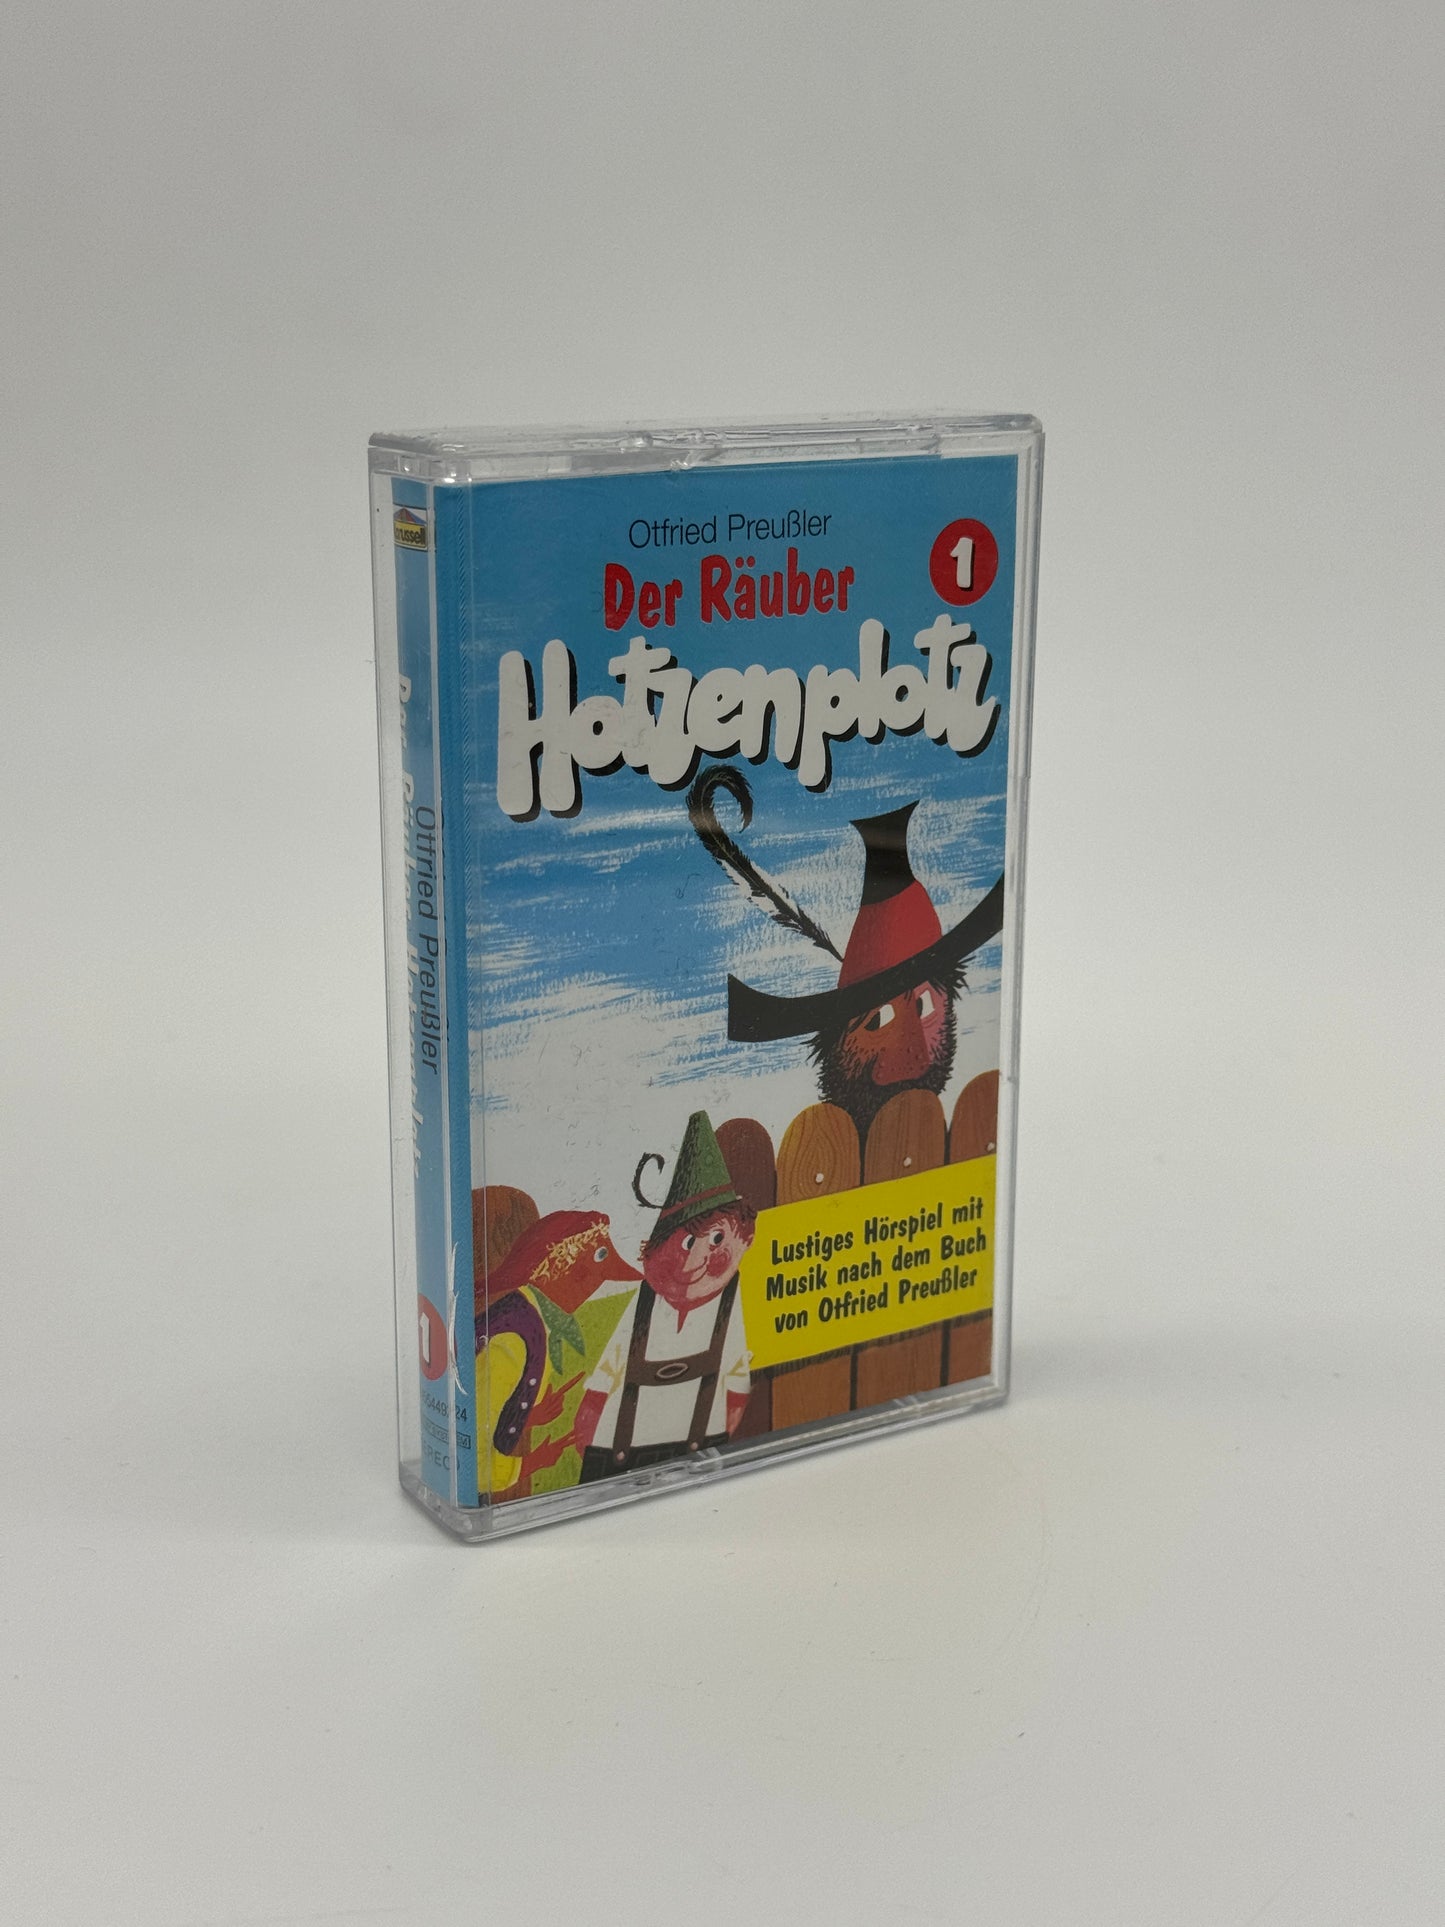 Otfried Preußler "Der Räuber Hotzenplotz" Folge #1 Hörspielkassette (2005)